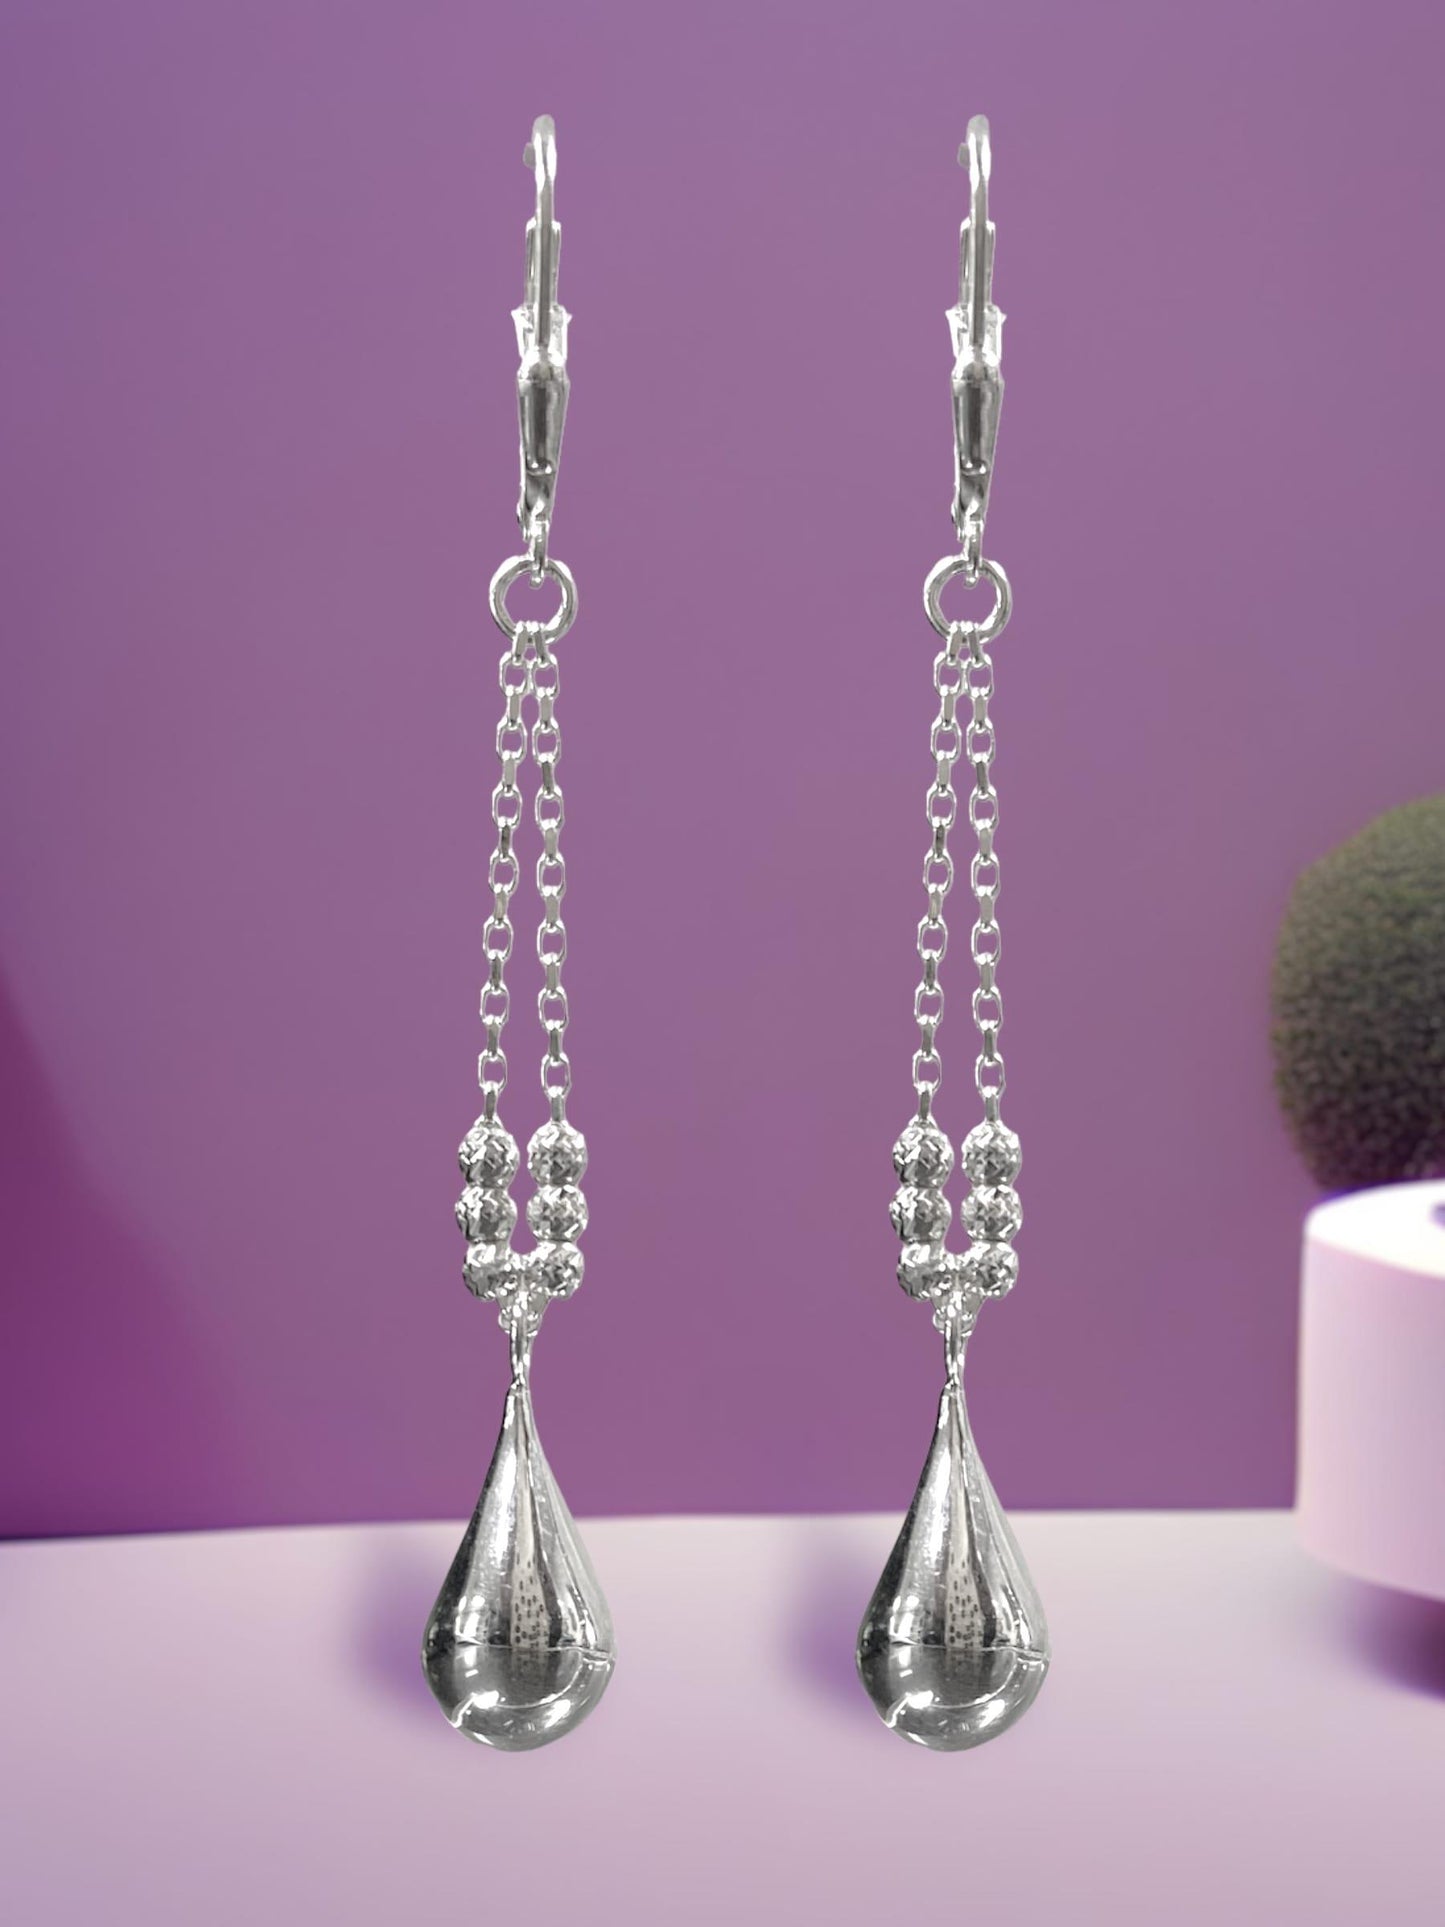 DIY Earring Kit - Stunning Silver Tear Drop Earrings - Too Cute Beads